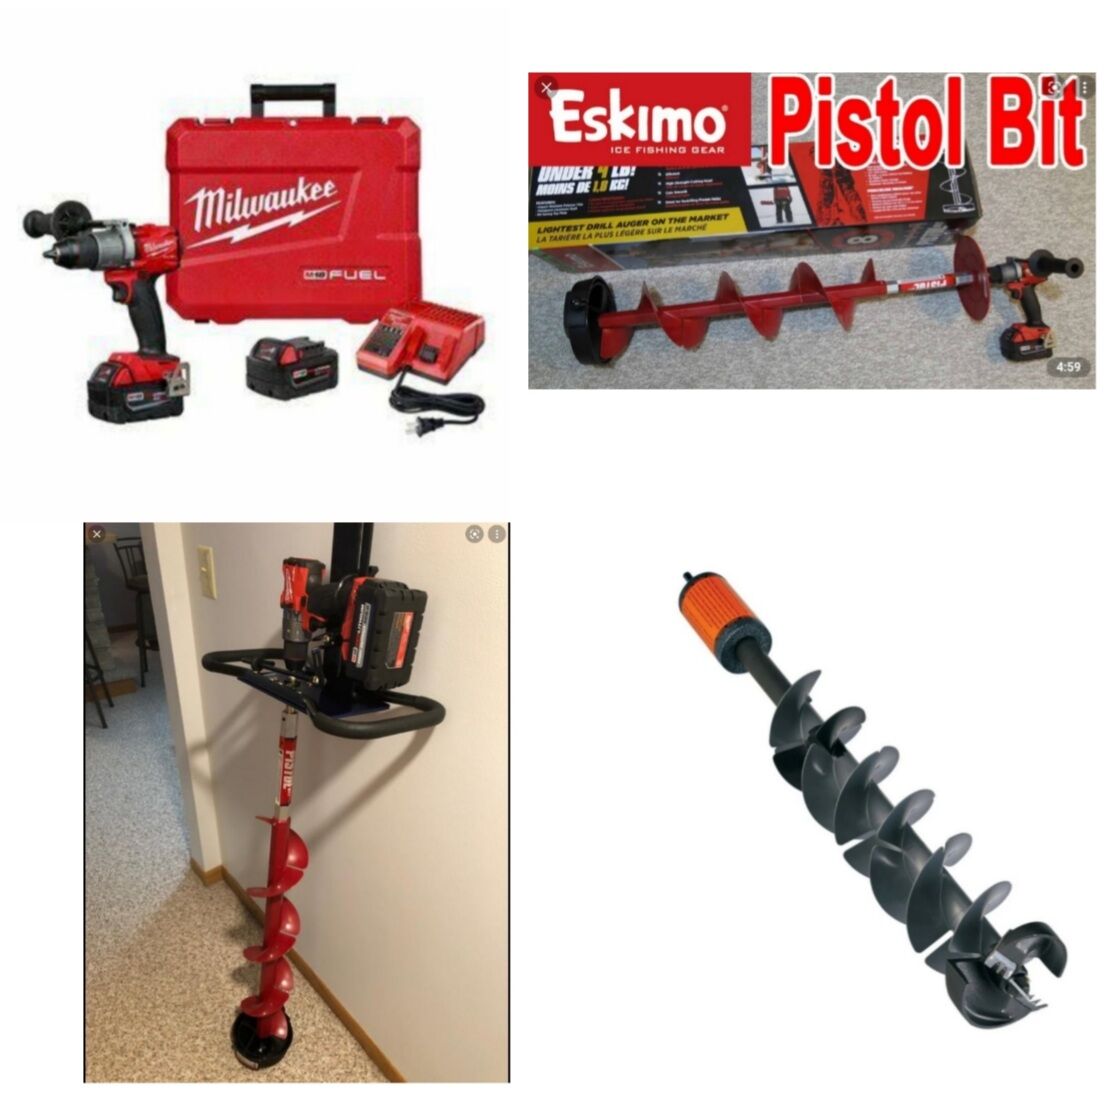 Eskimo Pistol Bit + Milwaukee Fuel M18 Drill - My Favorite Ice